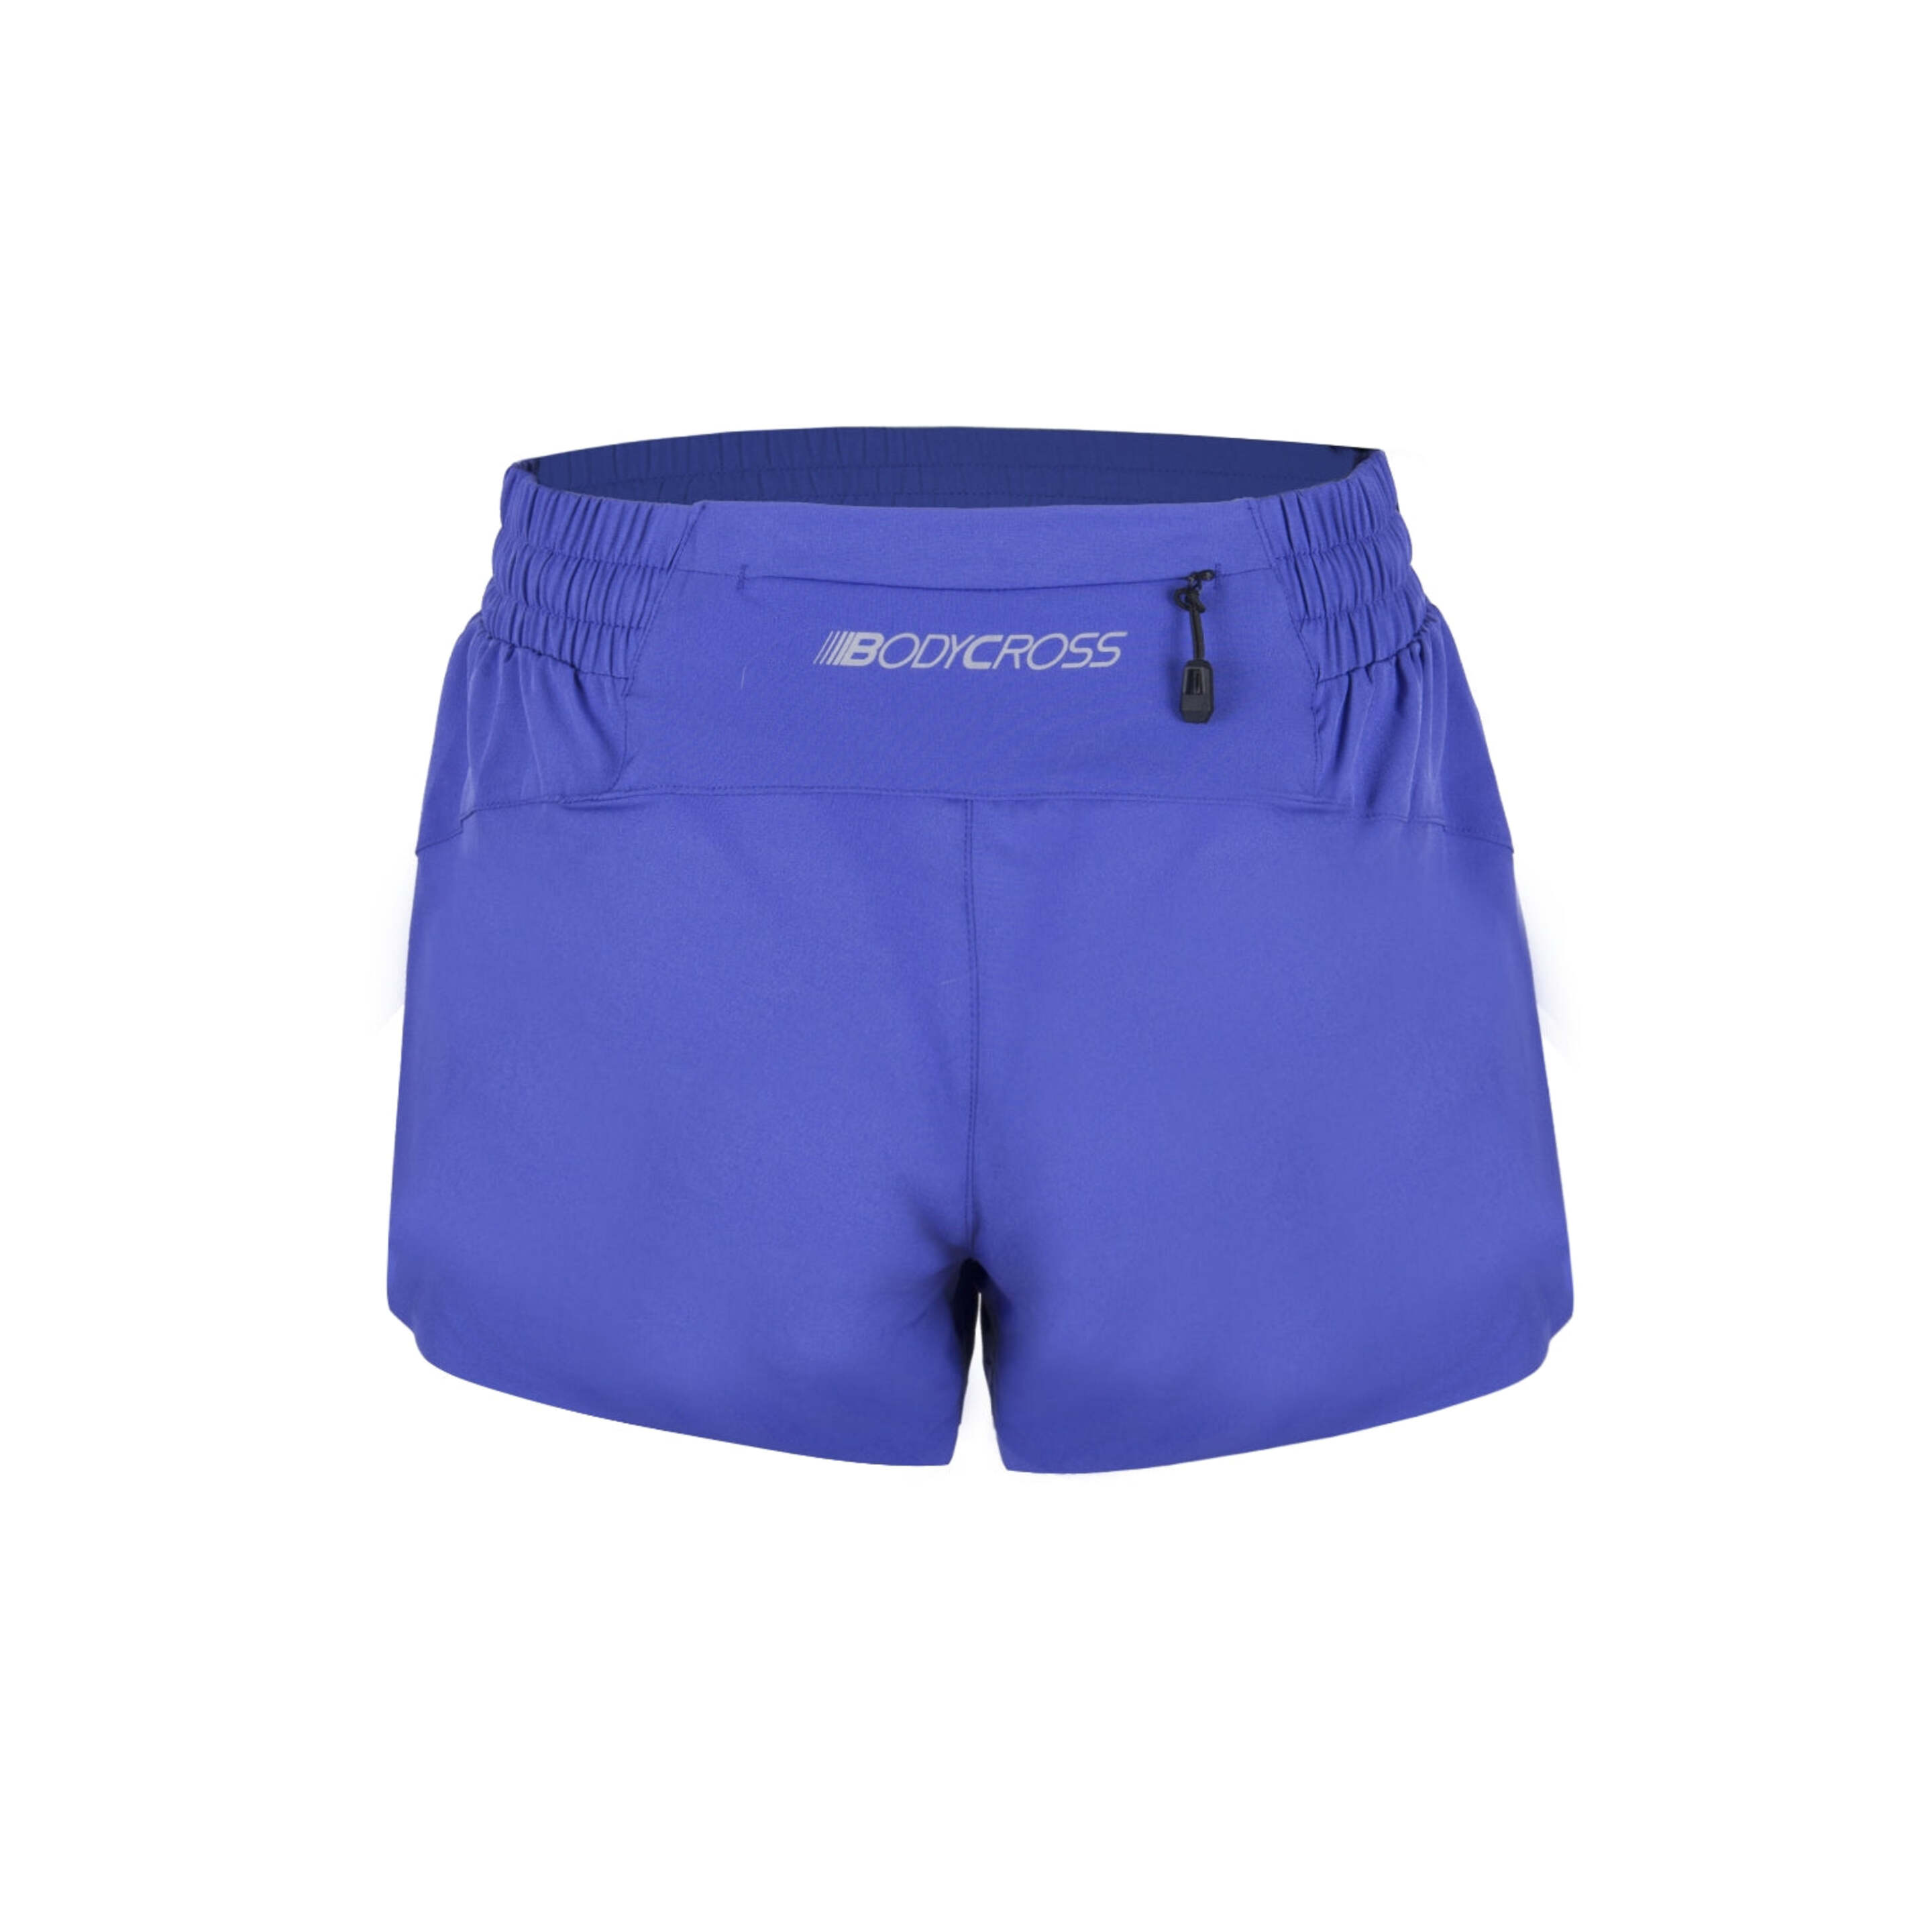 Pantalones Cortos De Carreras Bodycross Alix - Azul - Alix-blue/grey-xl  MKP